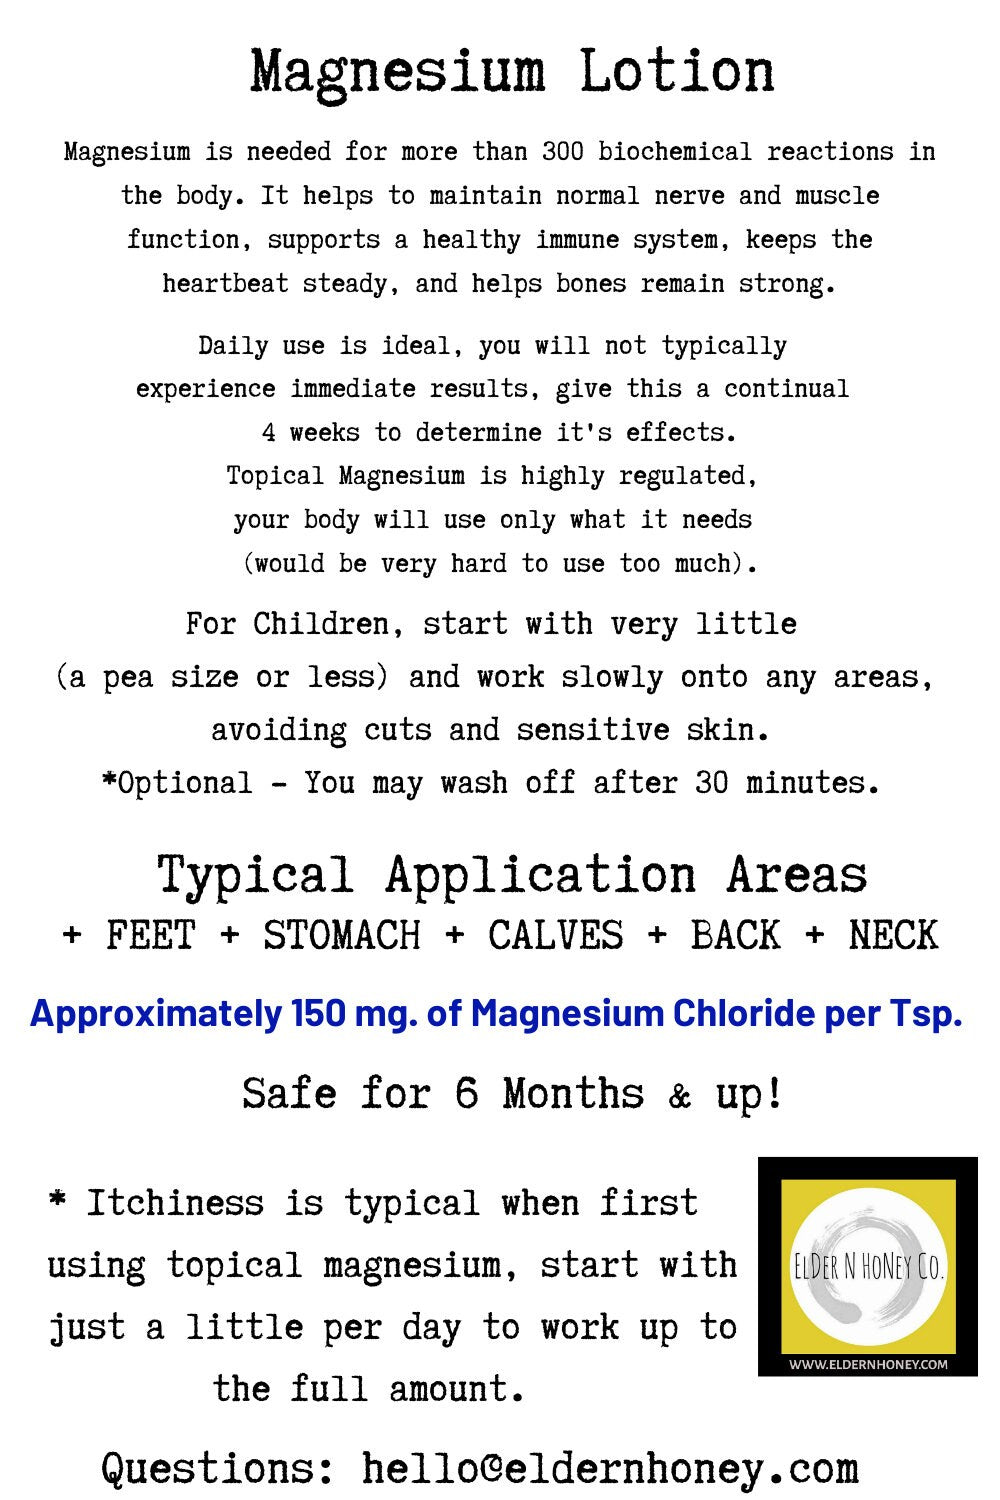 Organic Magnesium Lotion